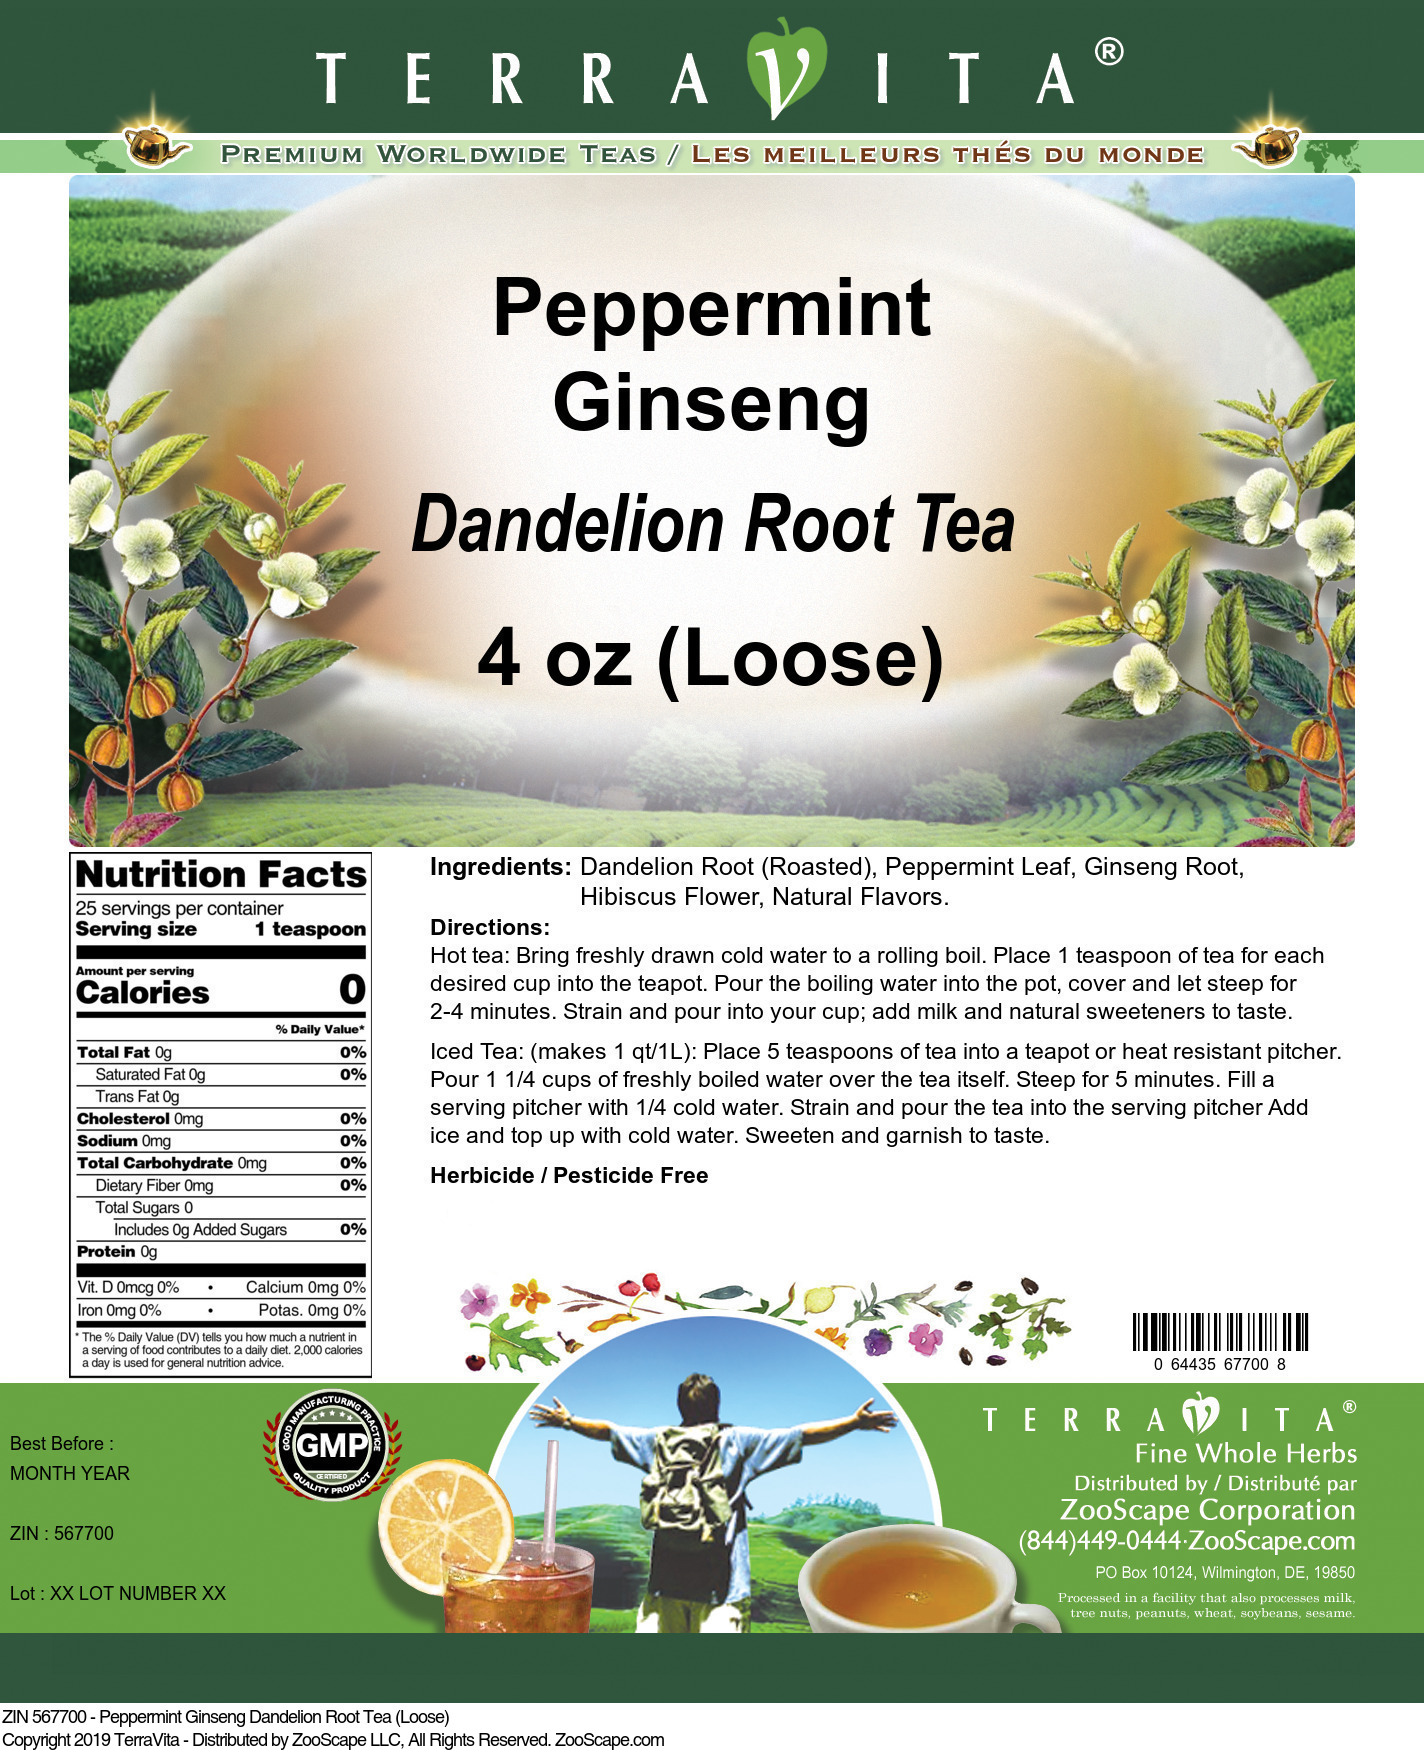 Peppermint Ginseng Dandelion Root Tea (Loose) - Label